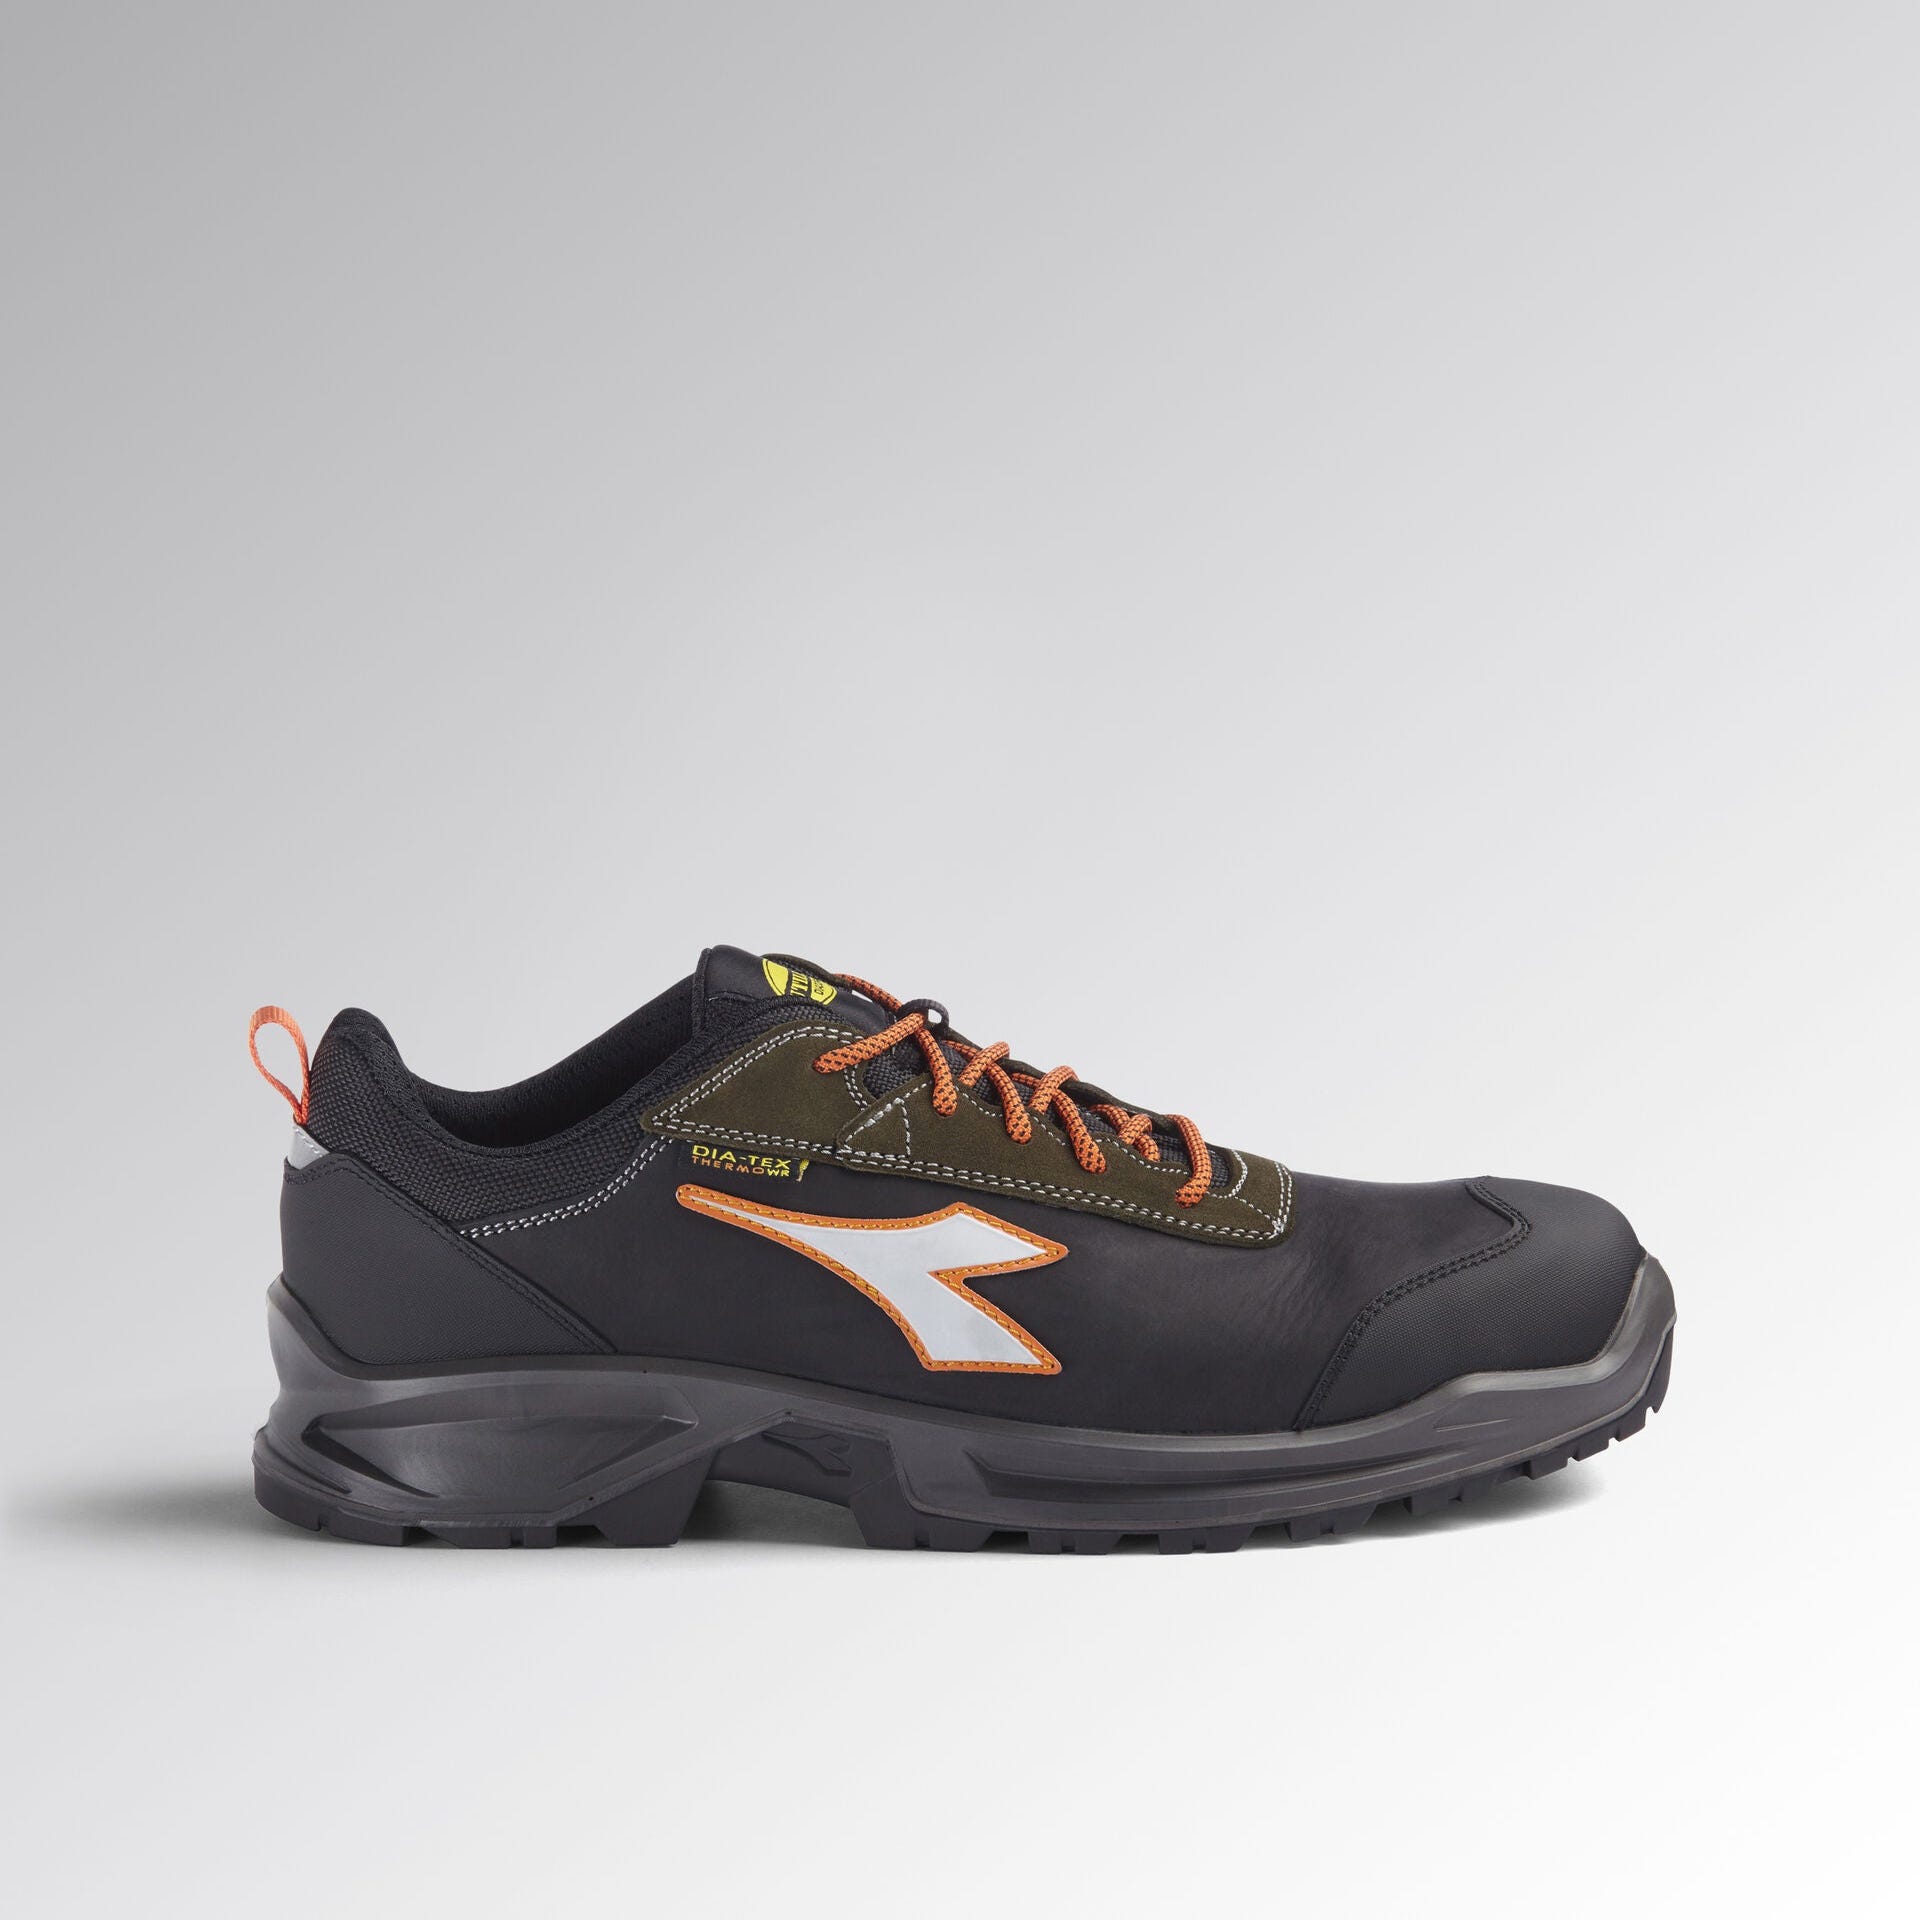 Chaussures imperméables thermo-isolantes SPORT DIATEX S3 Noir / Orange 48 5